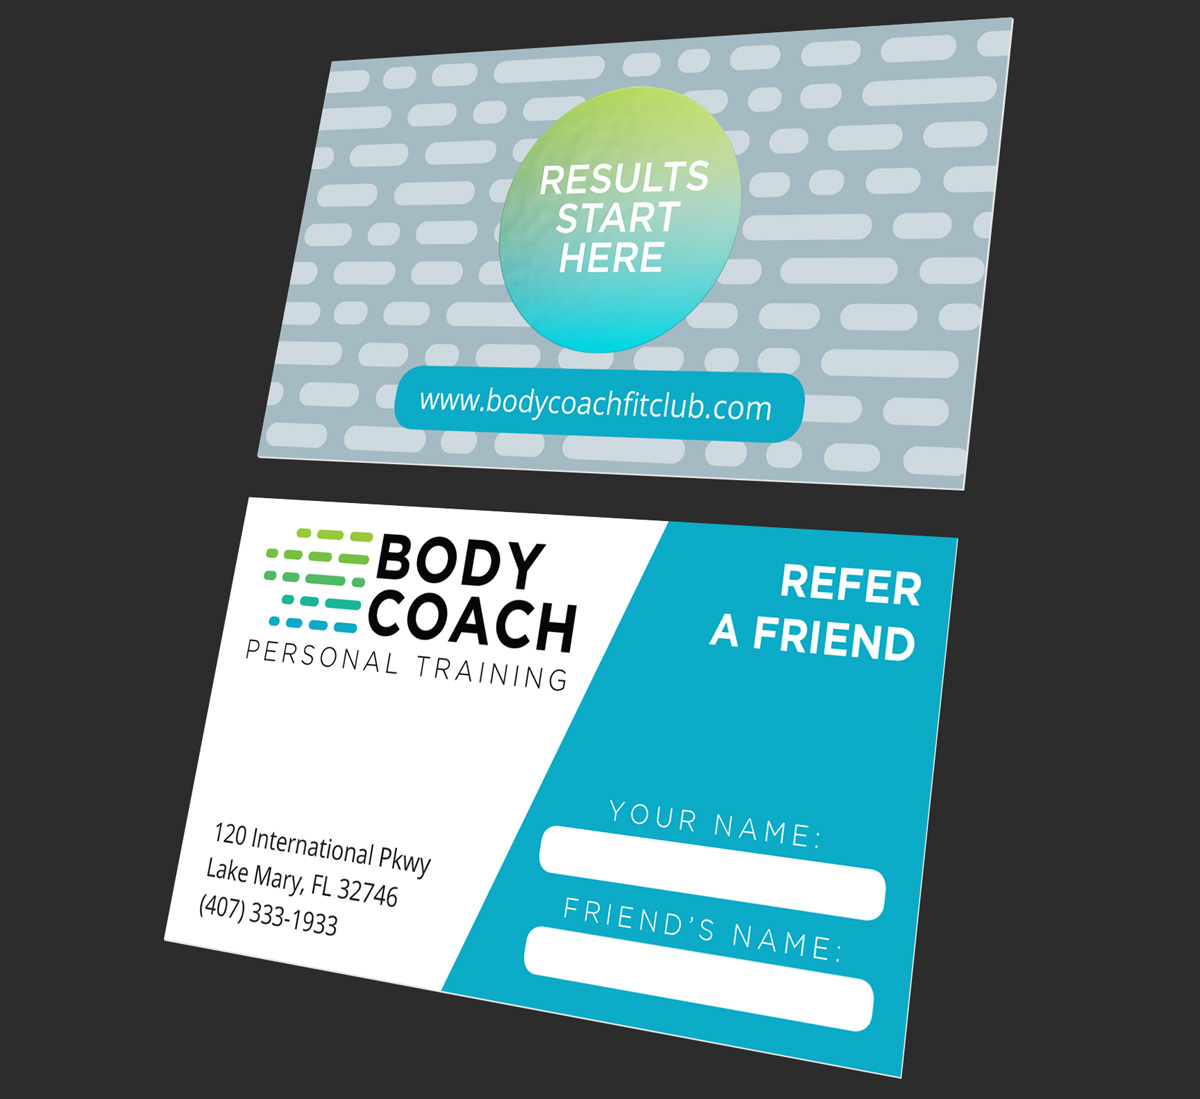 Body Coach Refer a Friend Business Card